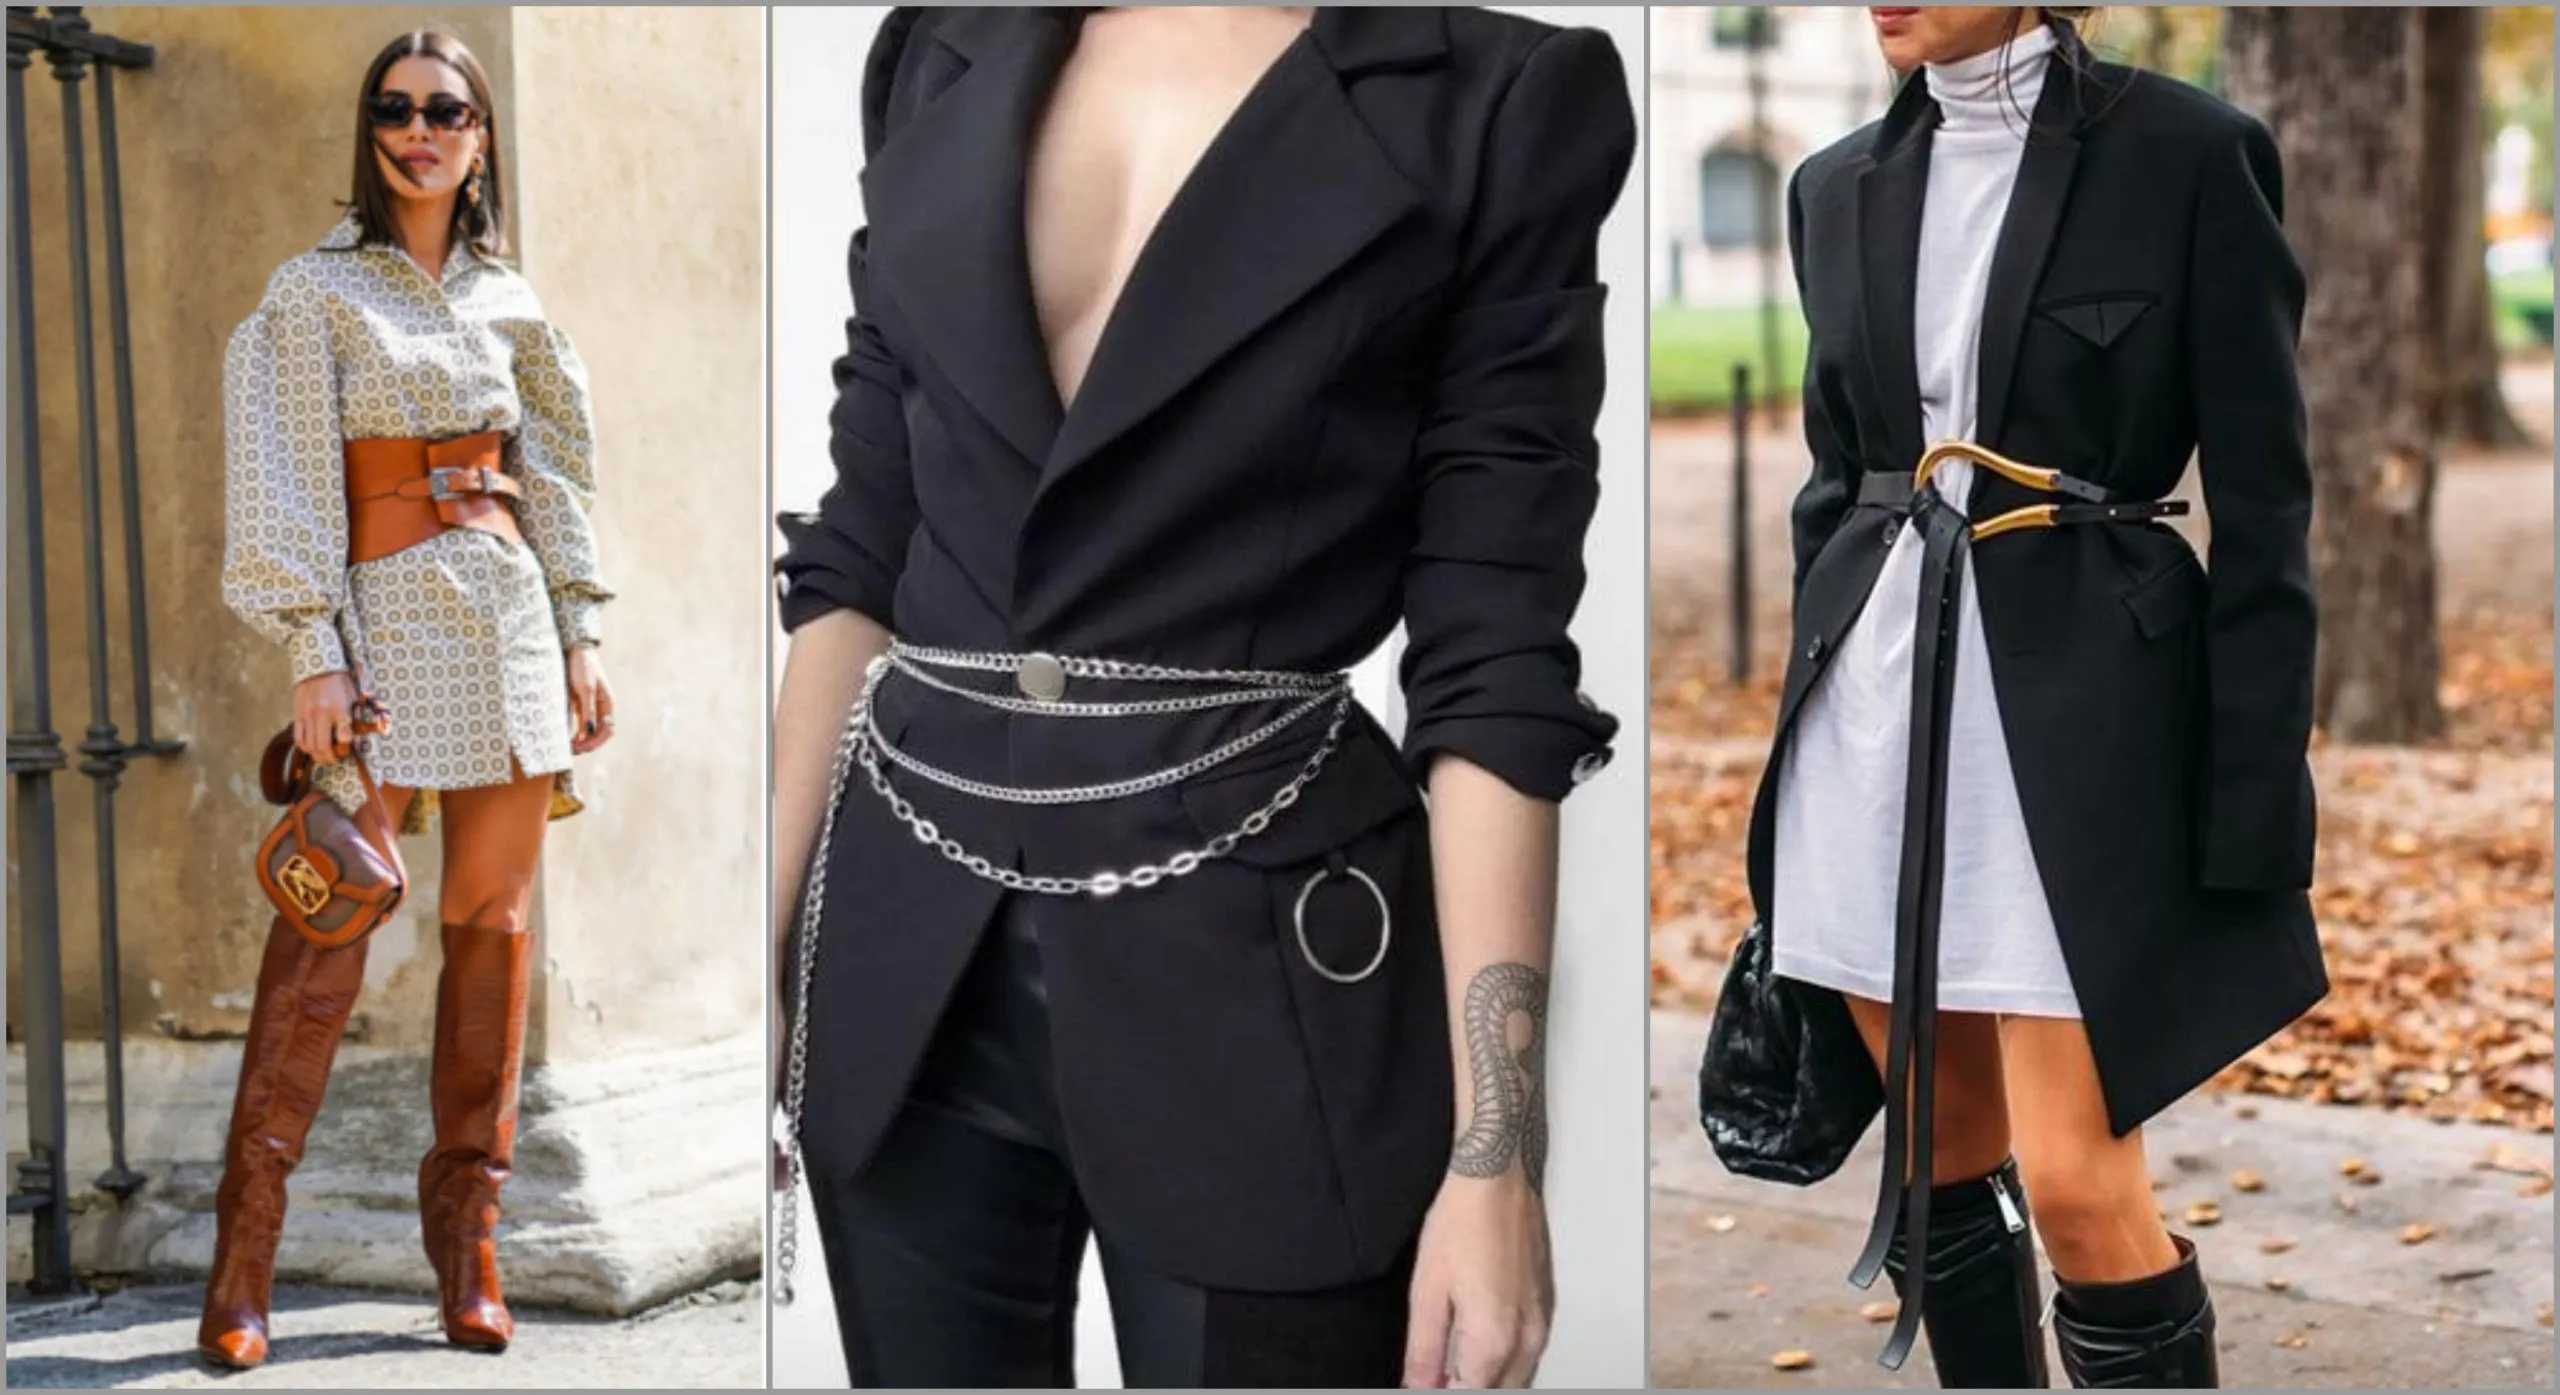 Cinturón, accesorio imprescindible en la moda femenina